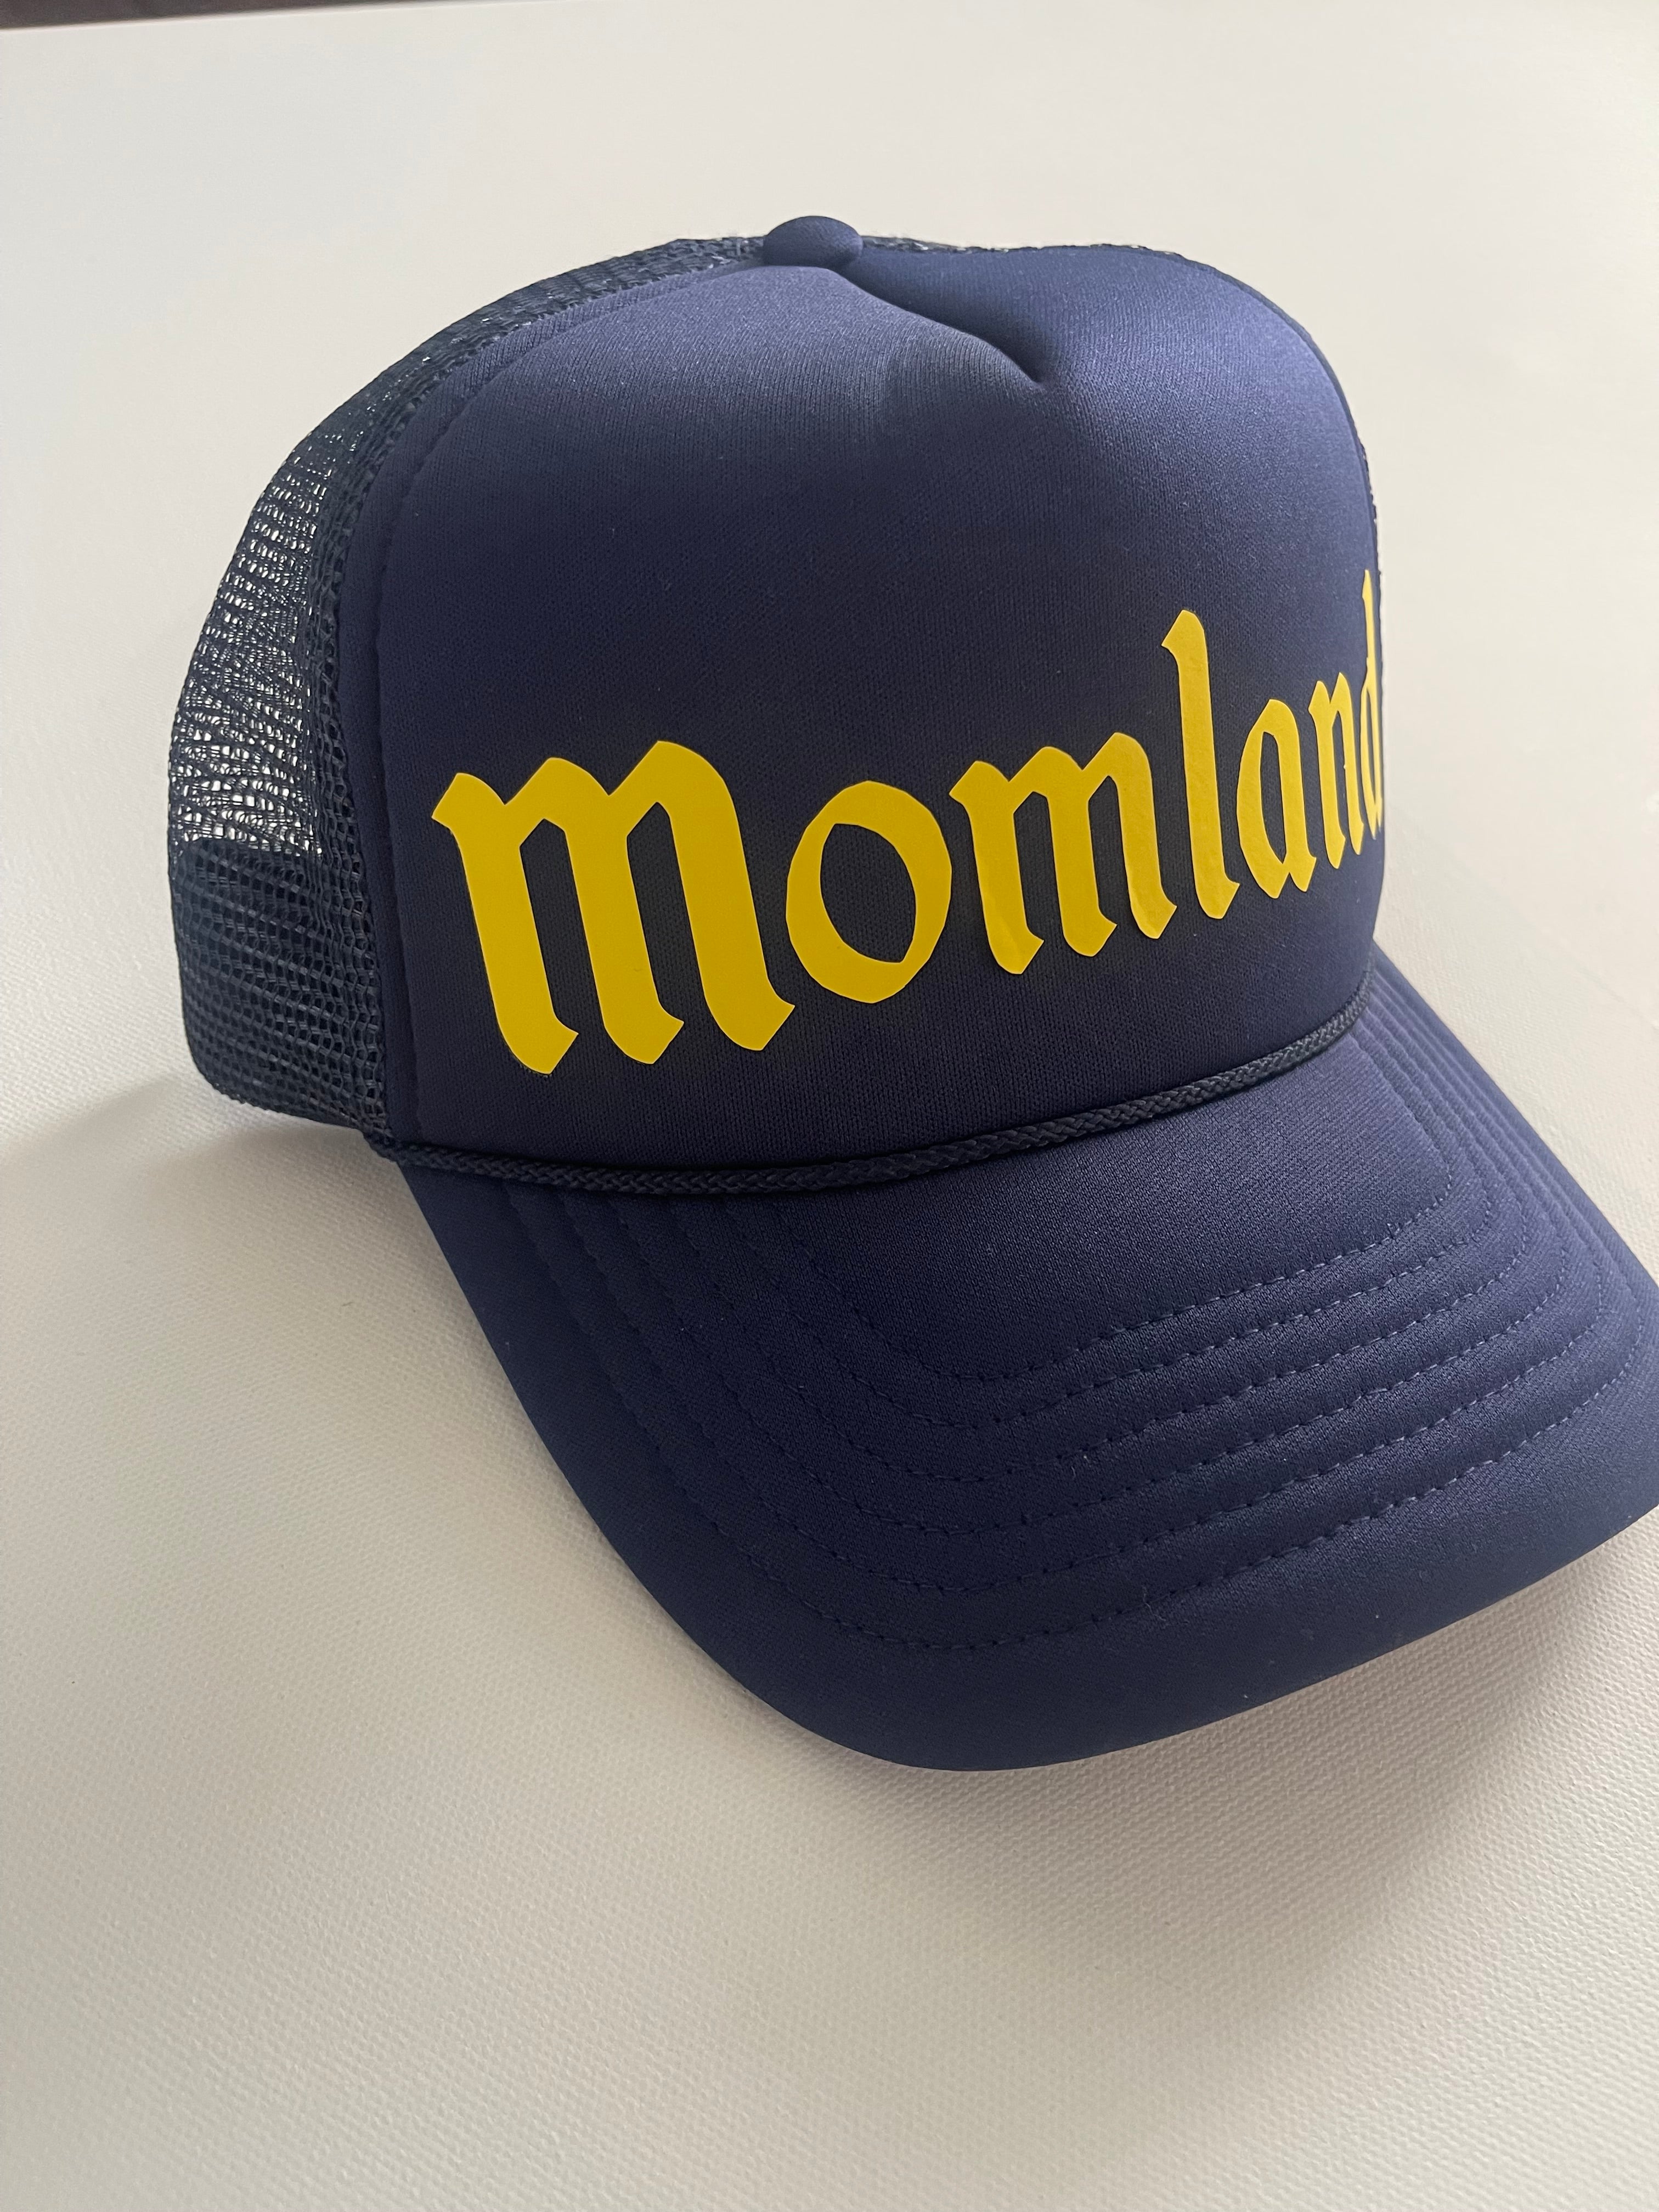 Momland Hat